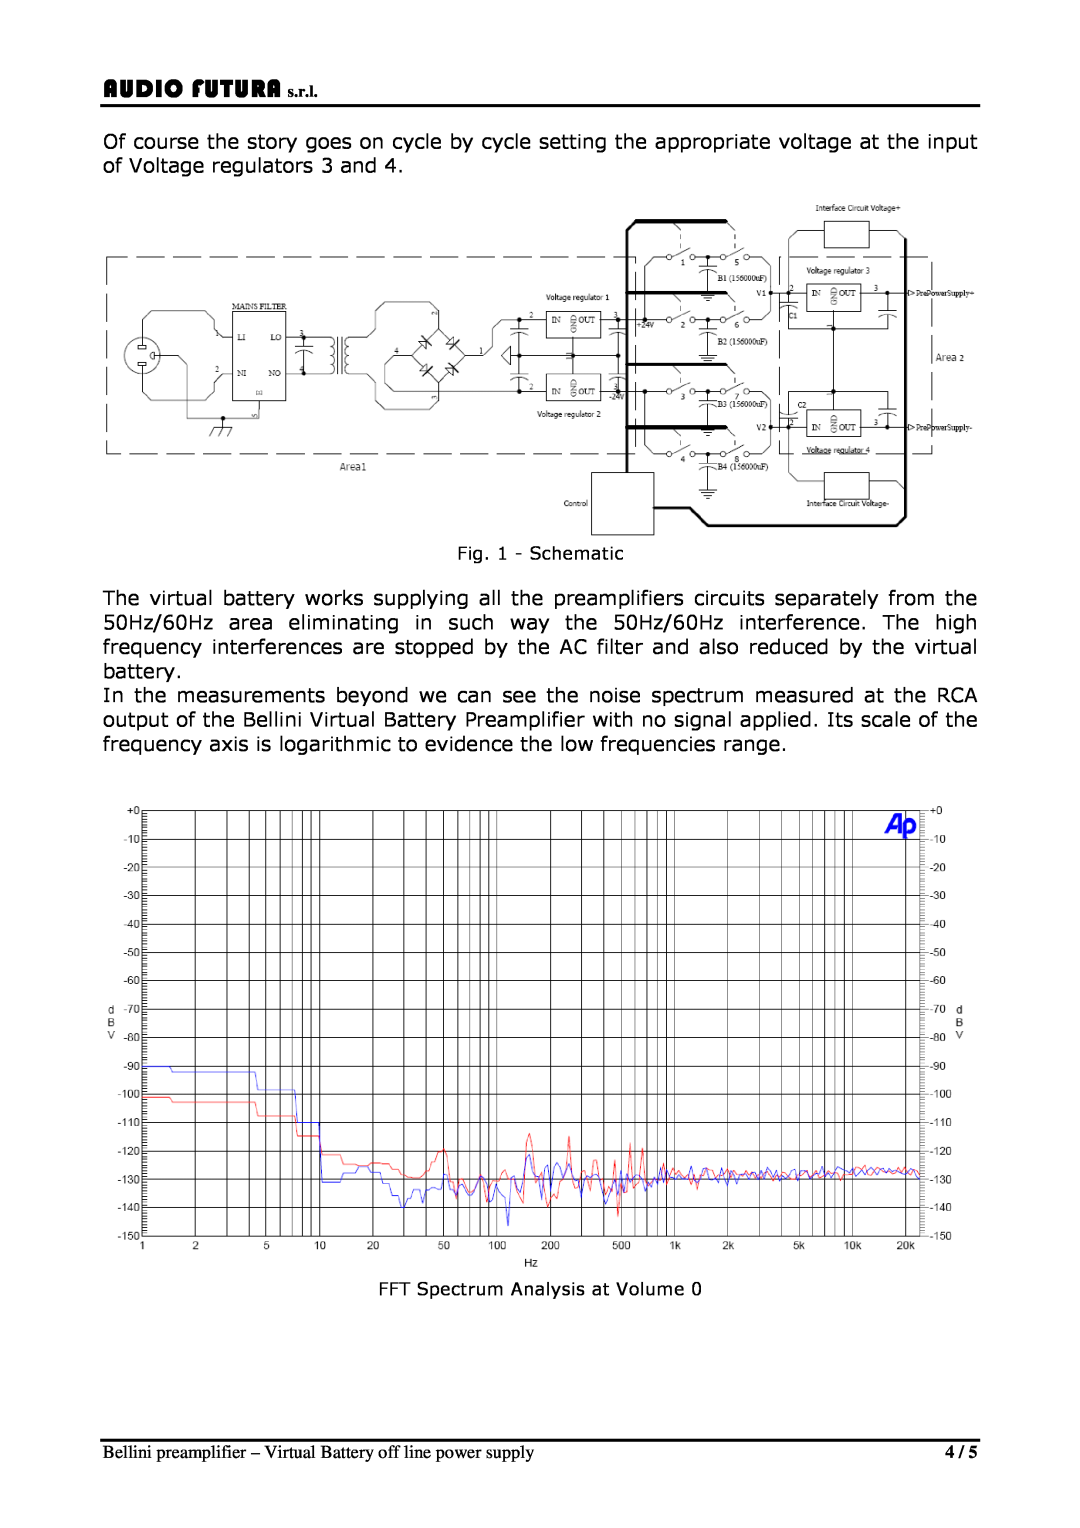 Audio Analogue SRL Bellini preamplifier manual AUDIO FUTURA s.r.l, Schematic, FFT Spectrum Analysis at Volume 